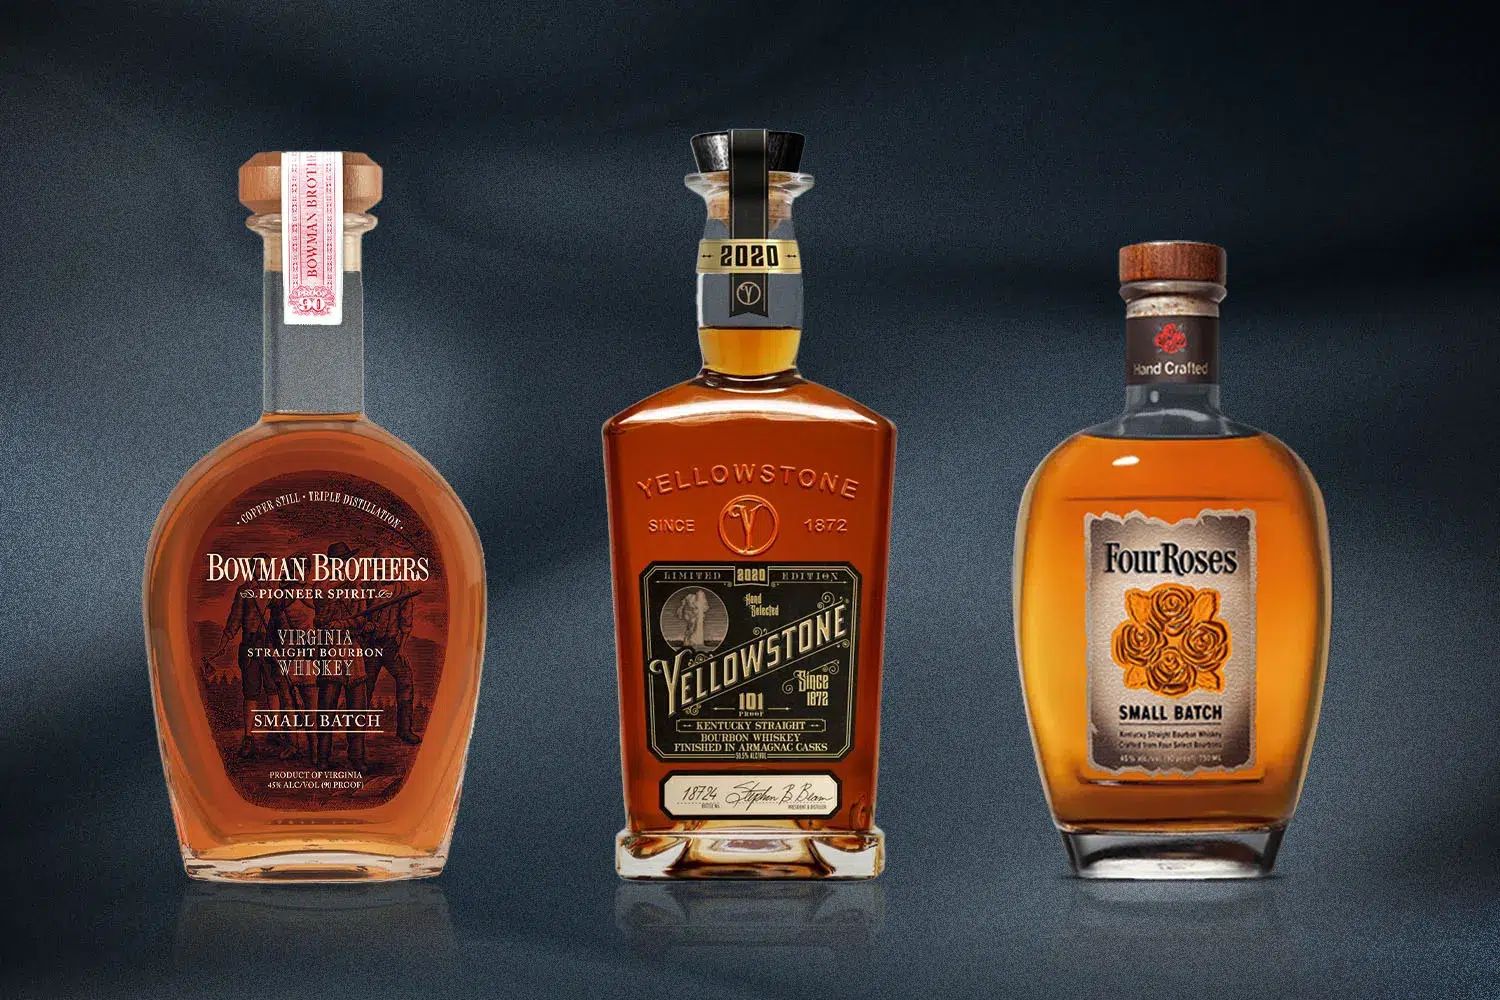 Three varieties of bourbon whiskey bottles on display.